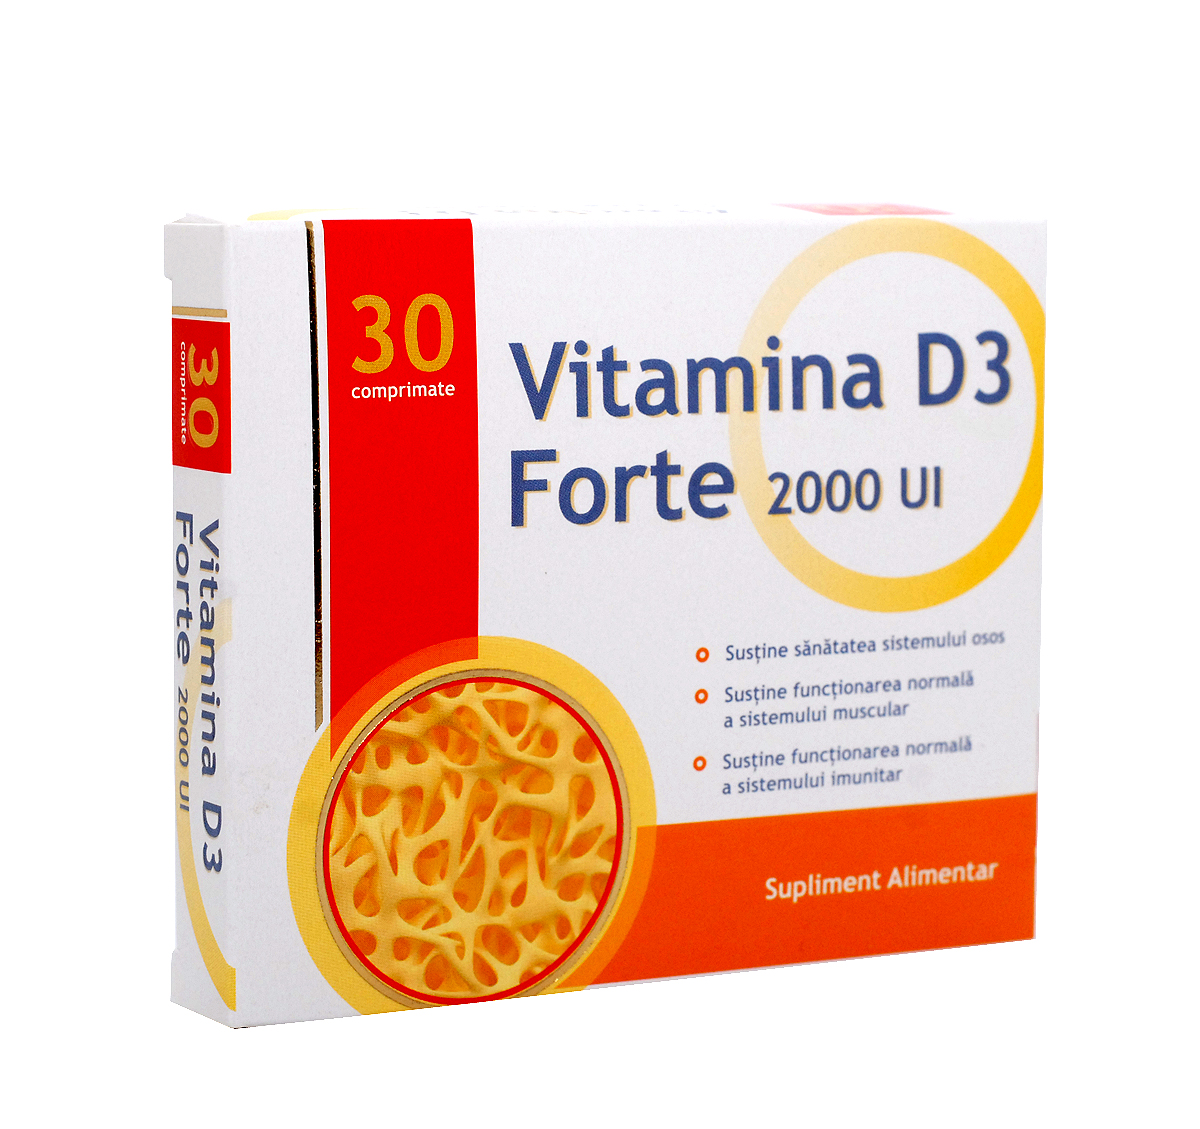 Vitamina D3 Forte 2000UI, 30 comprimate, Maspex